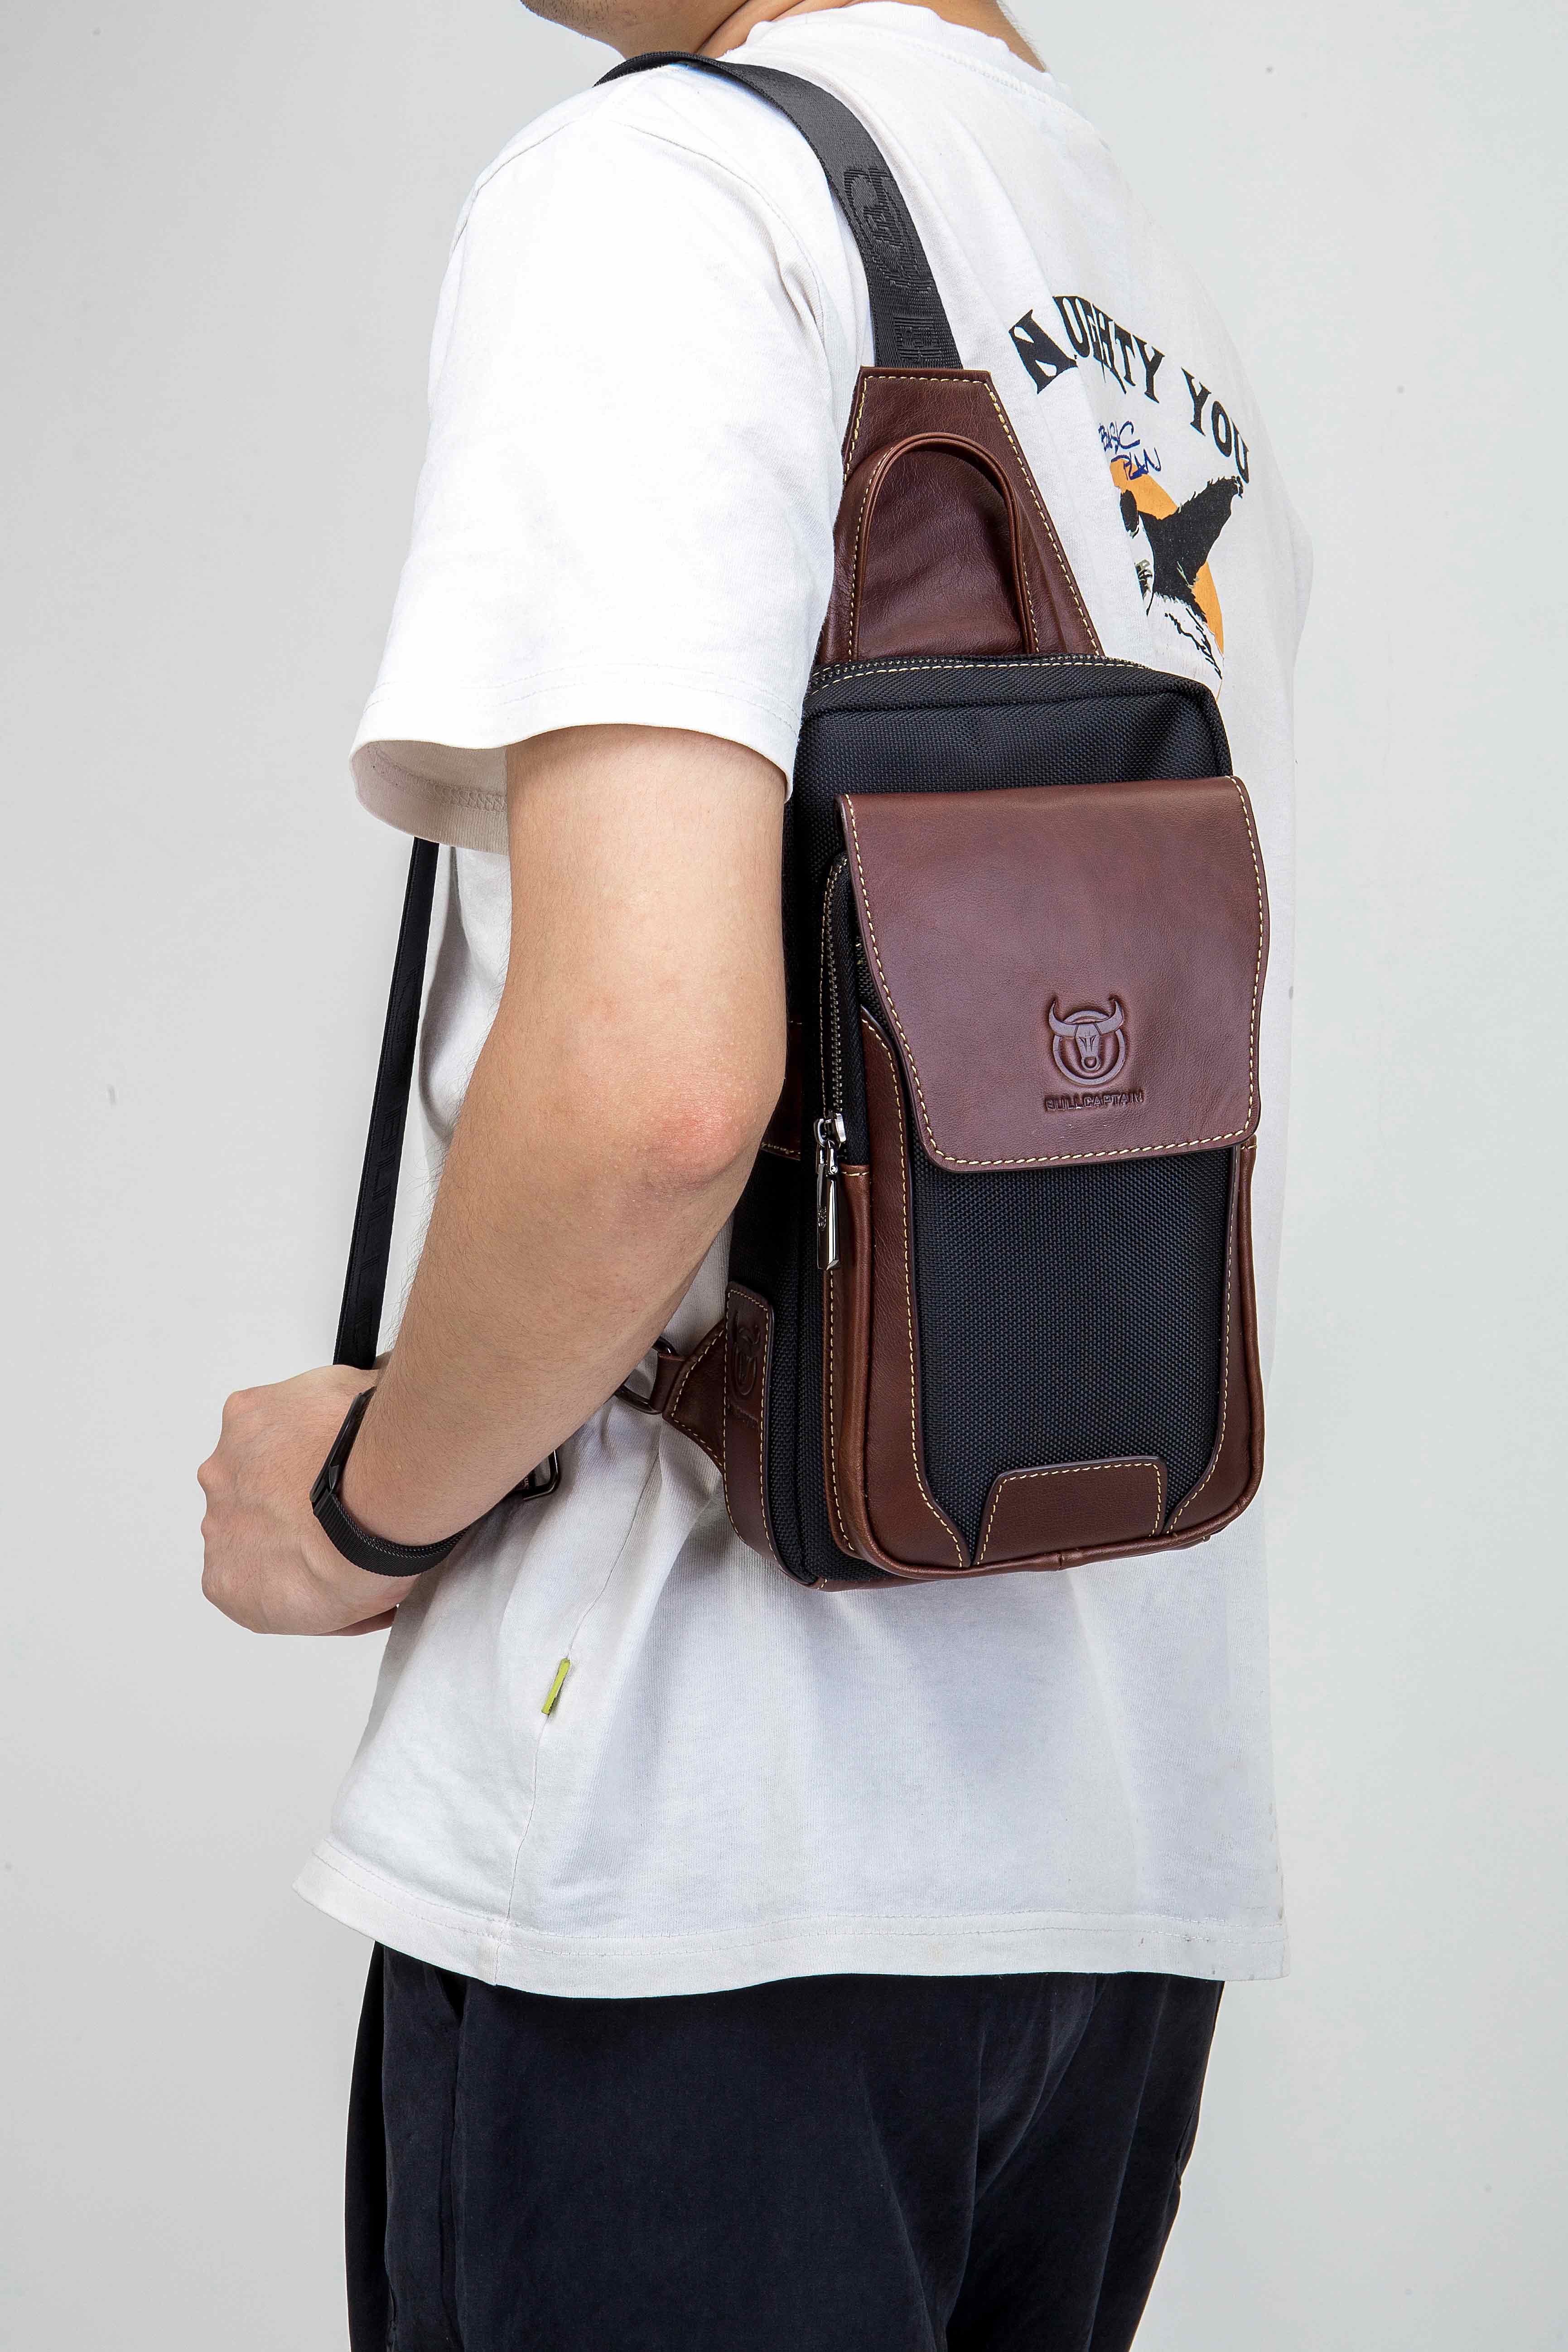 Bullcaptain Leather Sling Bag Durable Chest Shoulder Hiking Backpack Vintage Handmade Crossbody Daypack - 9999